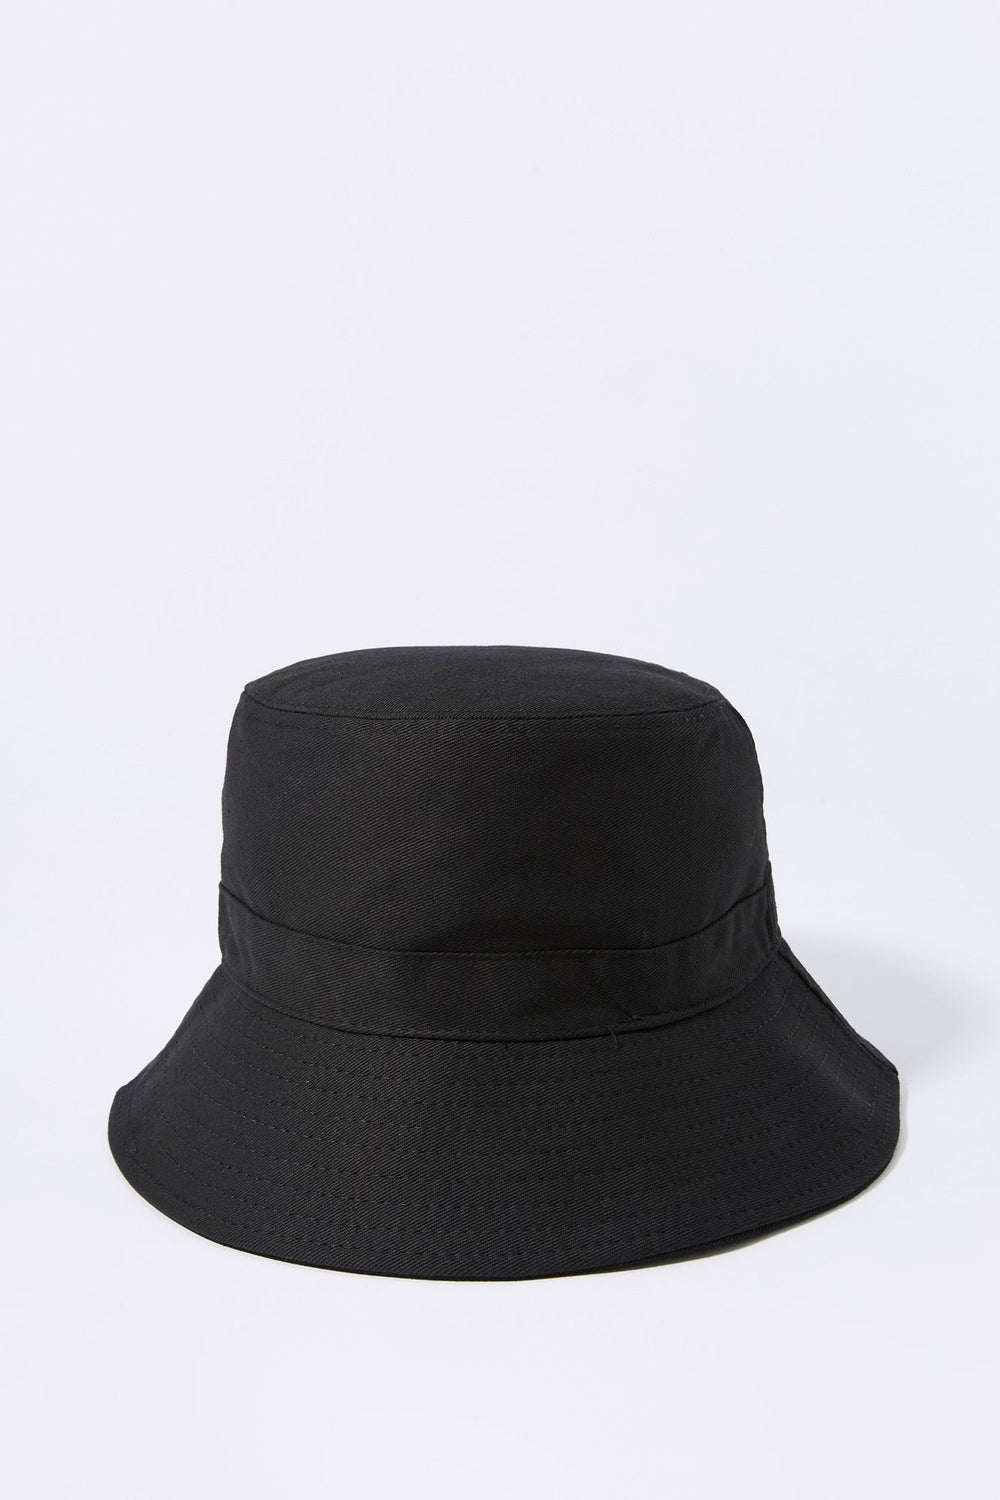 Black Bucket Hat Black Bucket Hat 1